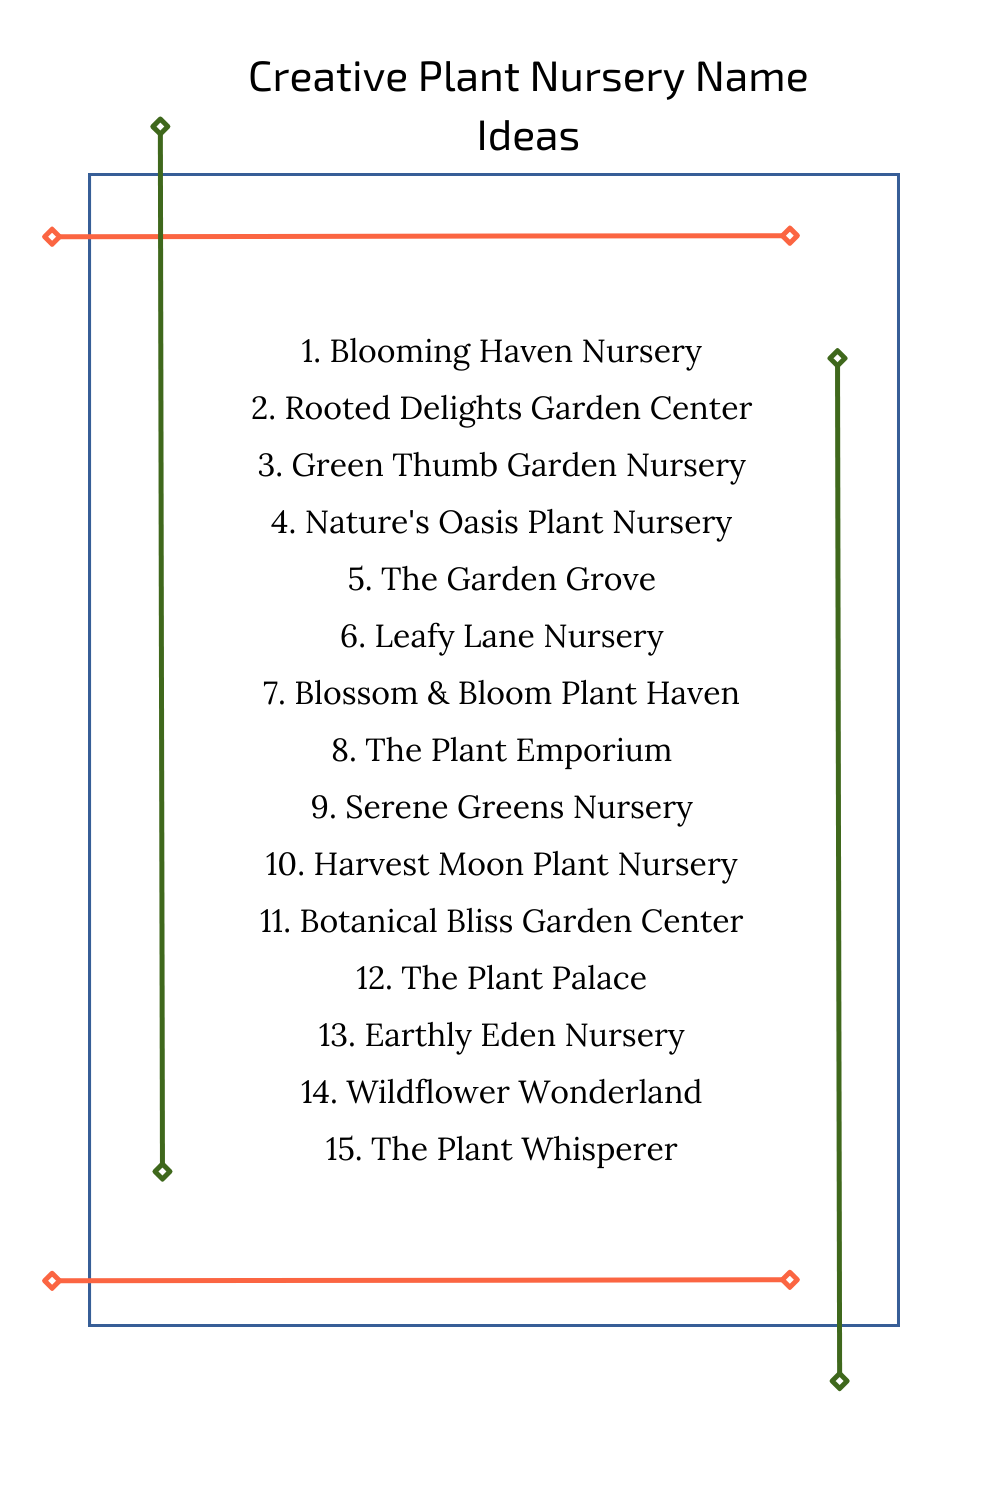 Creative Plant Nursery Name Ideas